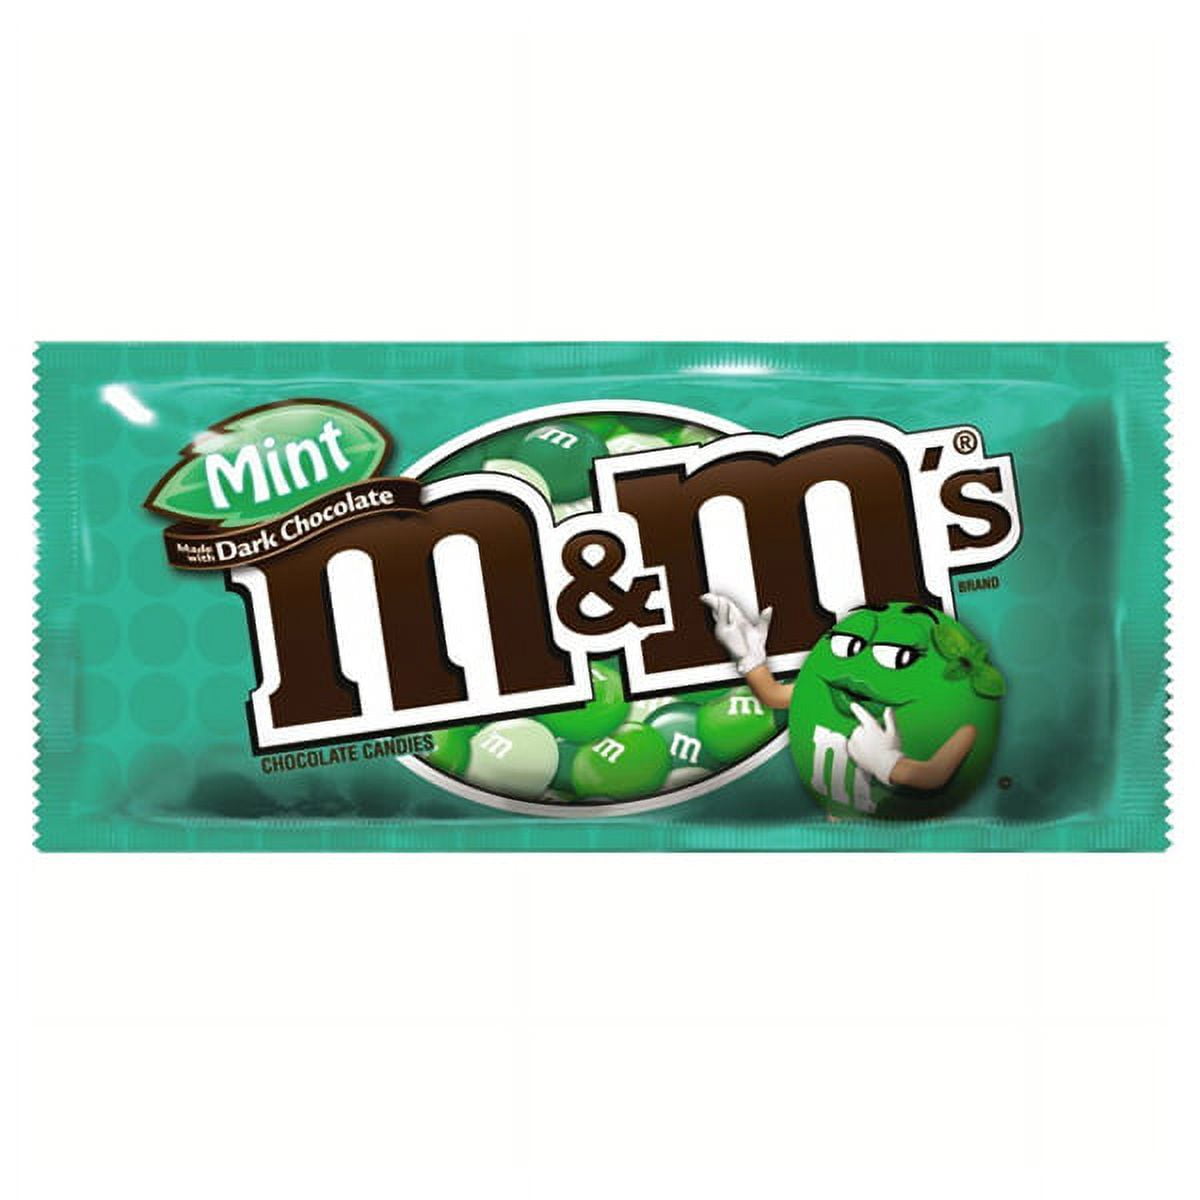 Mint Chocolate M&M's Fudge - Pins and Procrastination